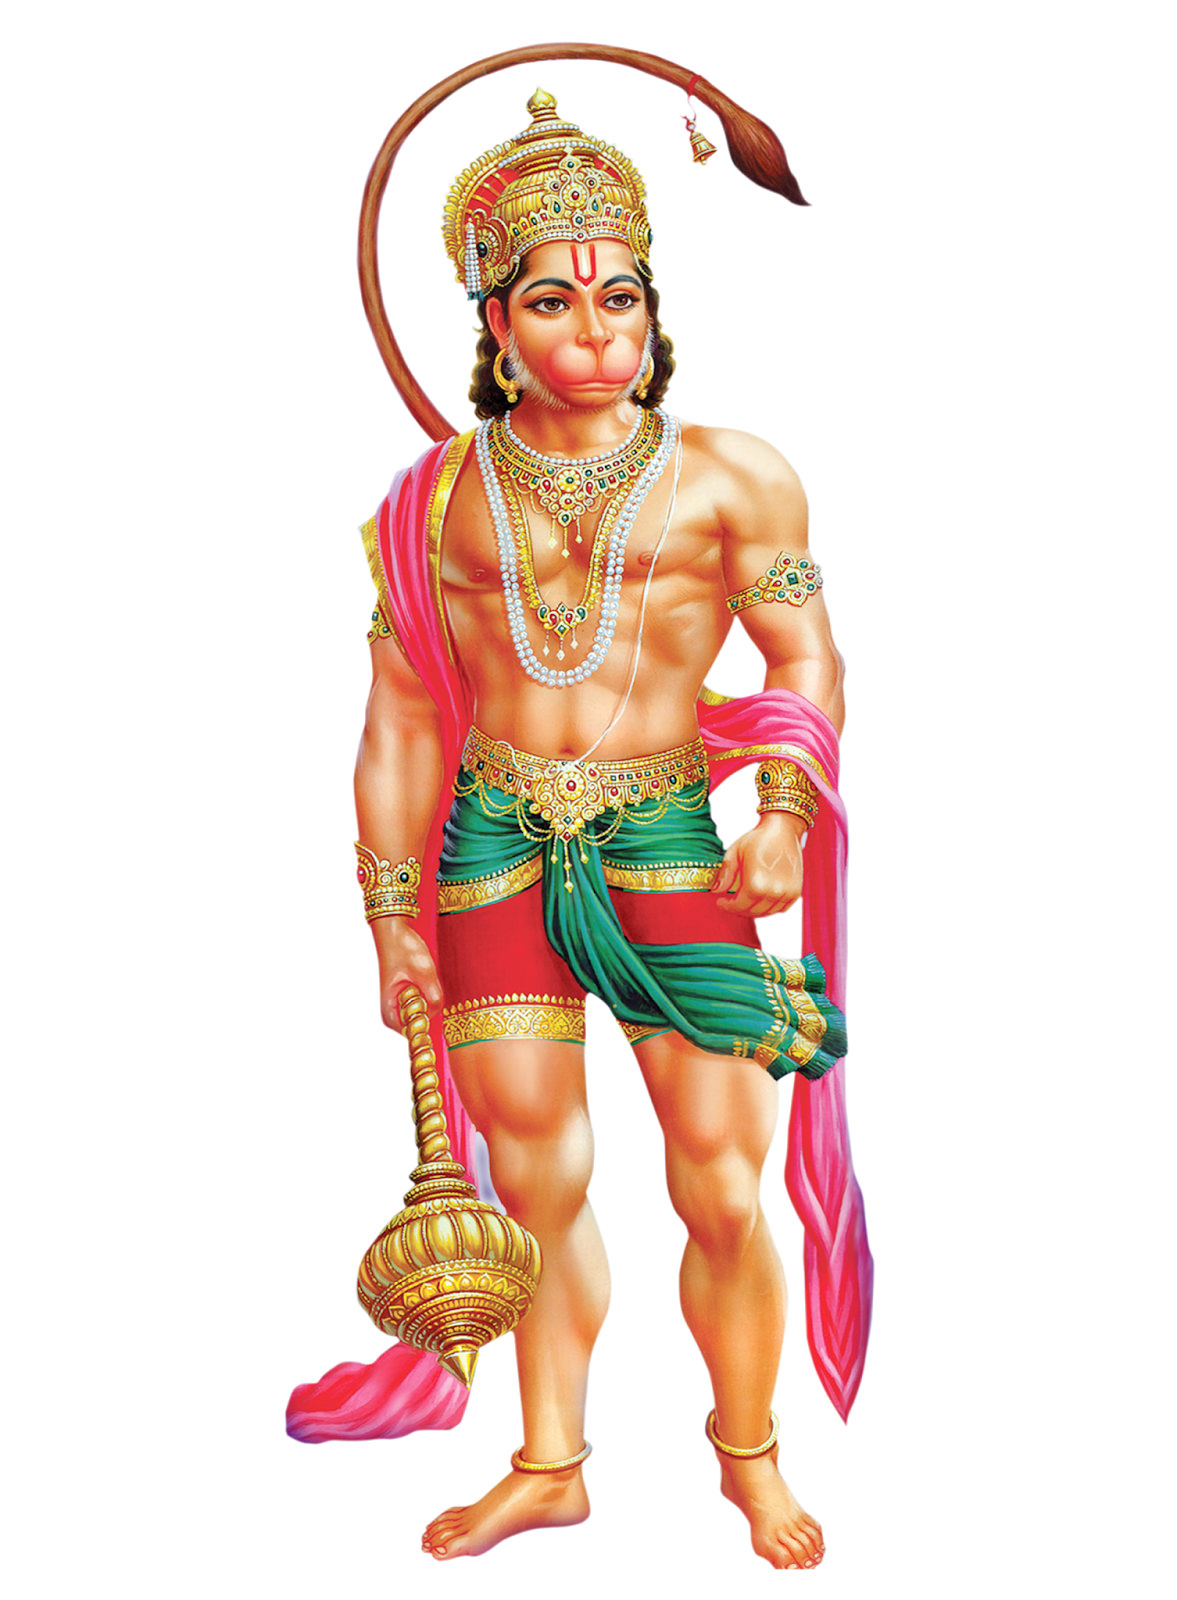 Why Worship Lord Hanuman | Hanuman Blog